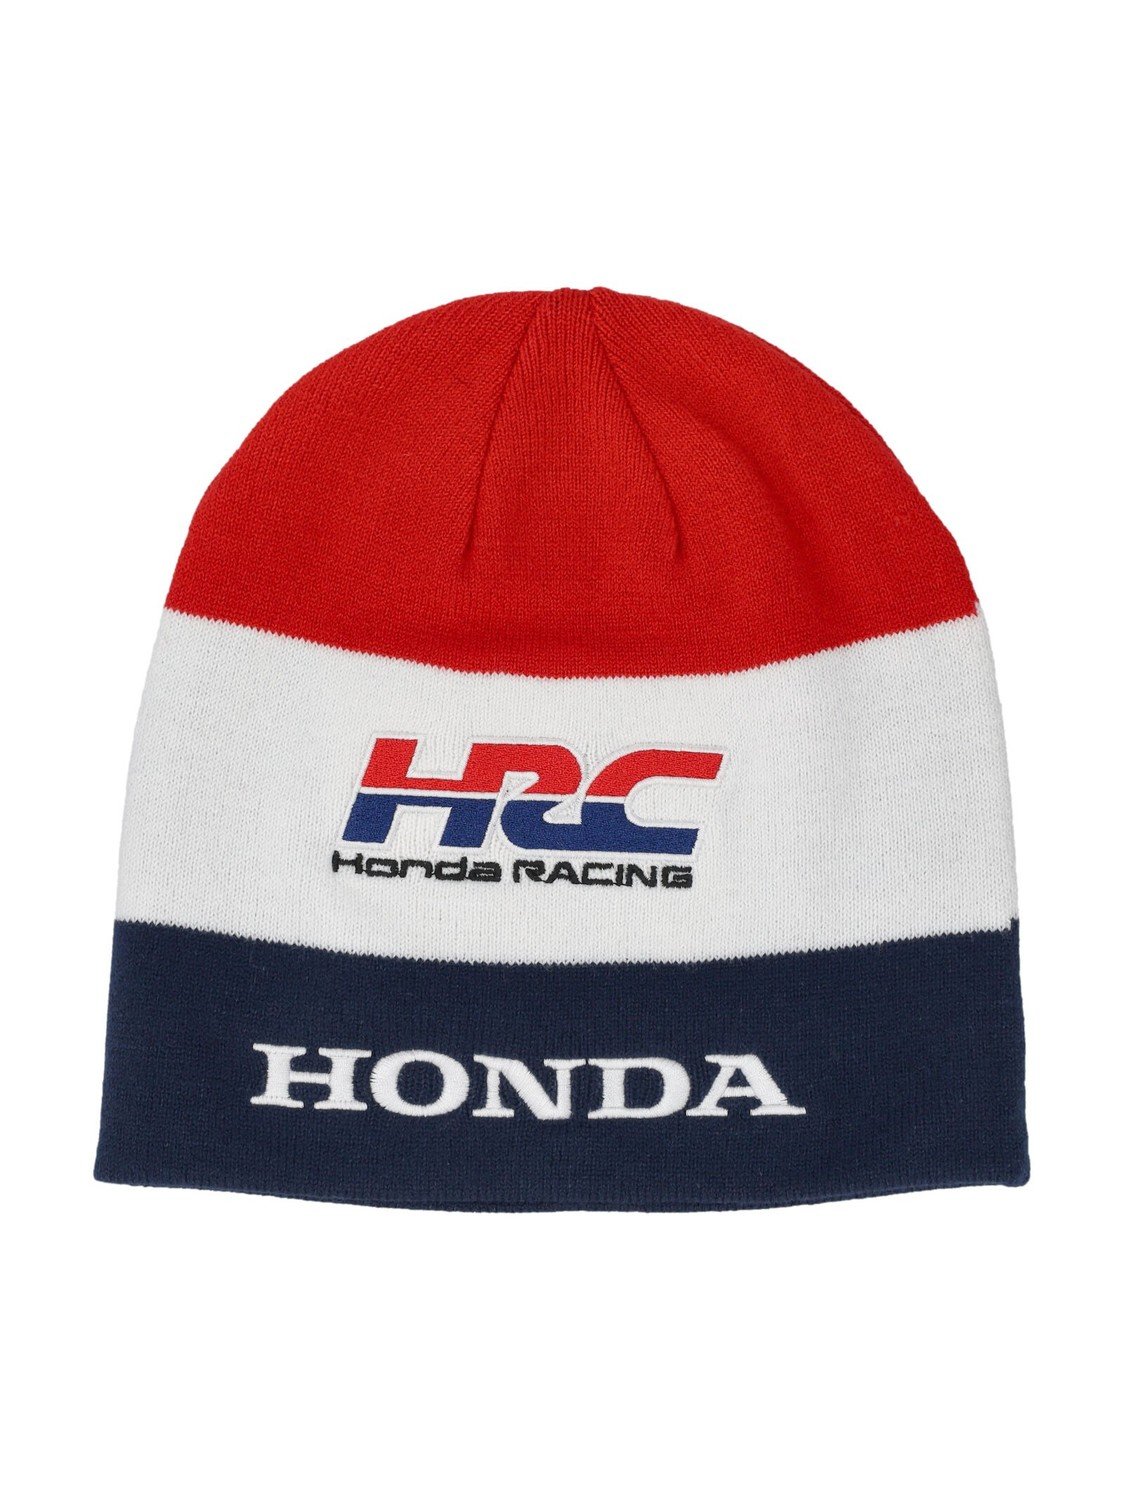 GP Racing Apparel HRC Honda zimní čepice HRC